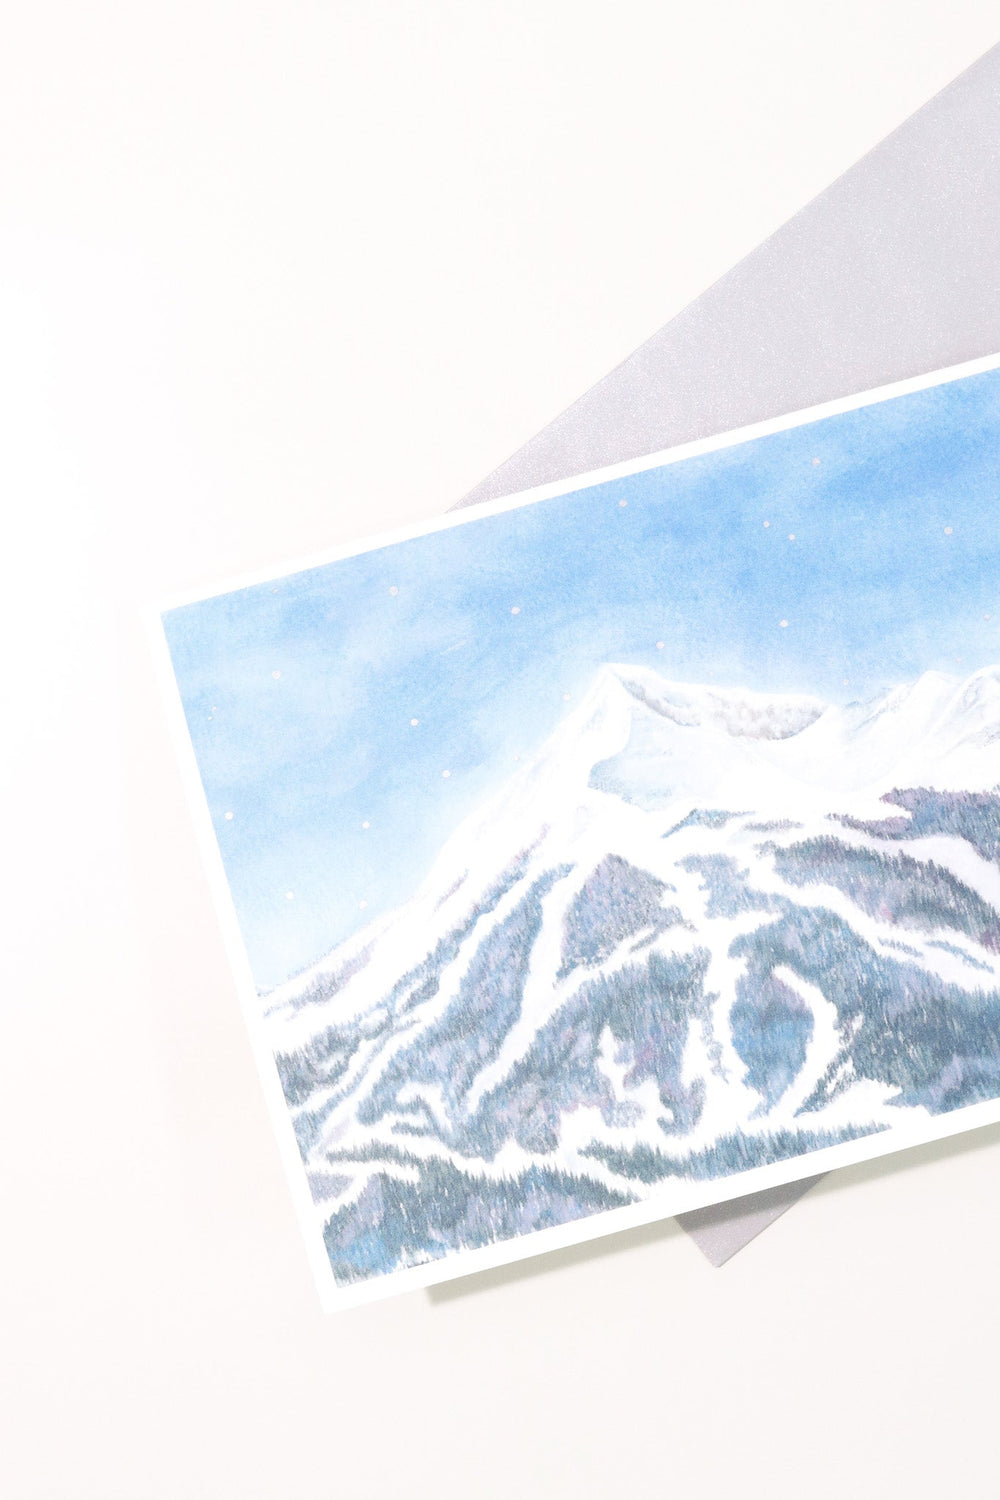 Big Sky Lone Peak Card - Heyday